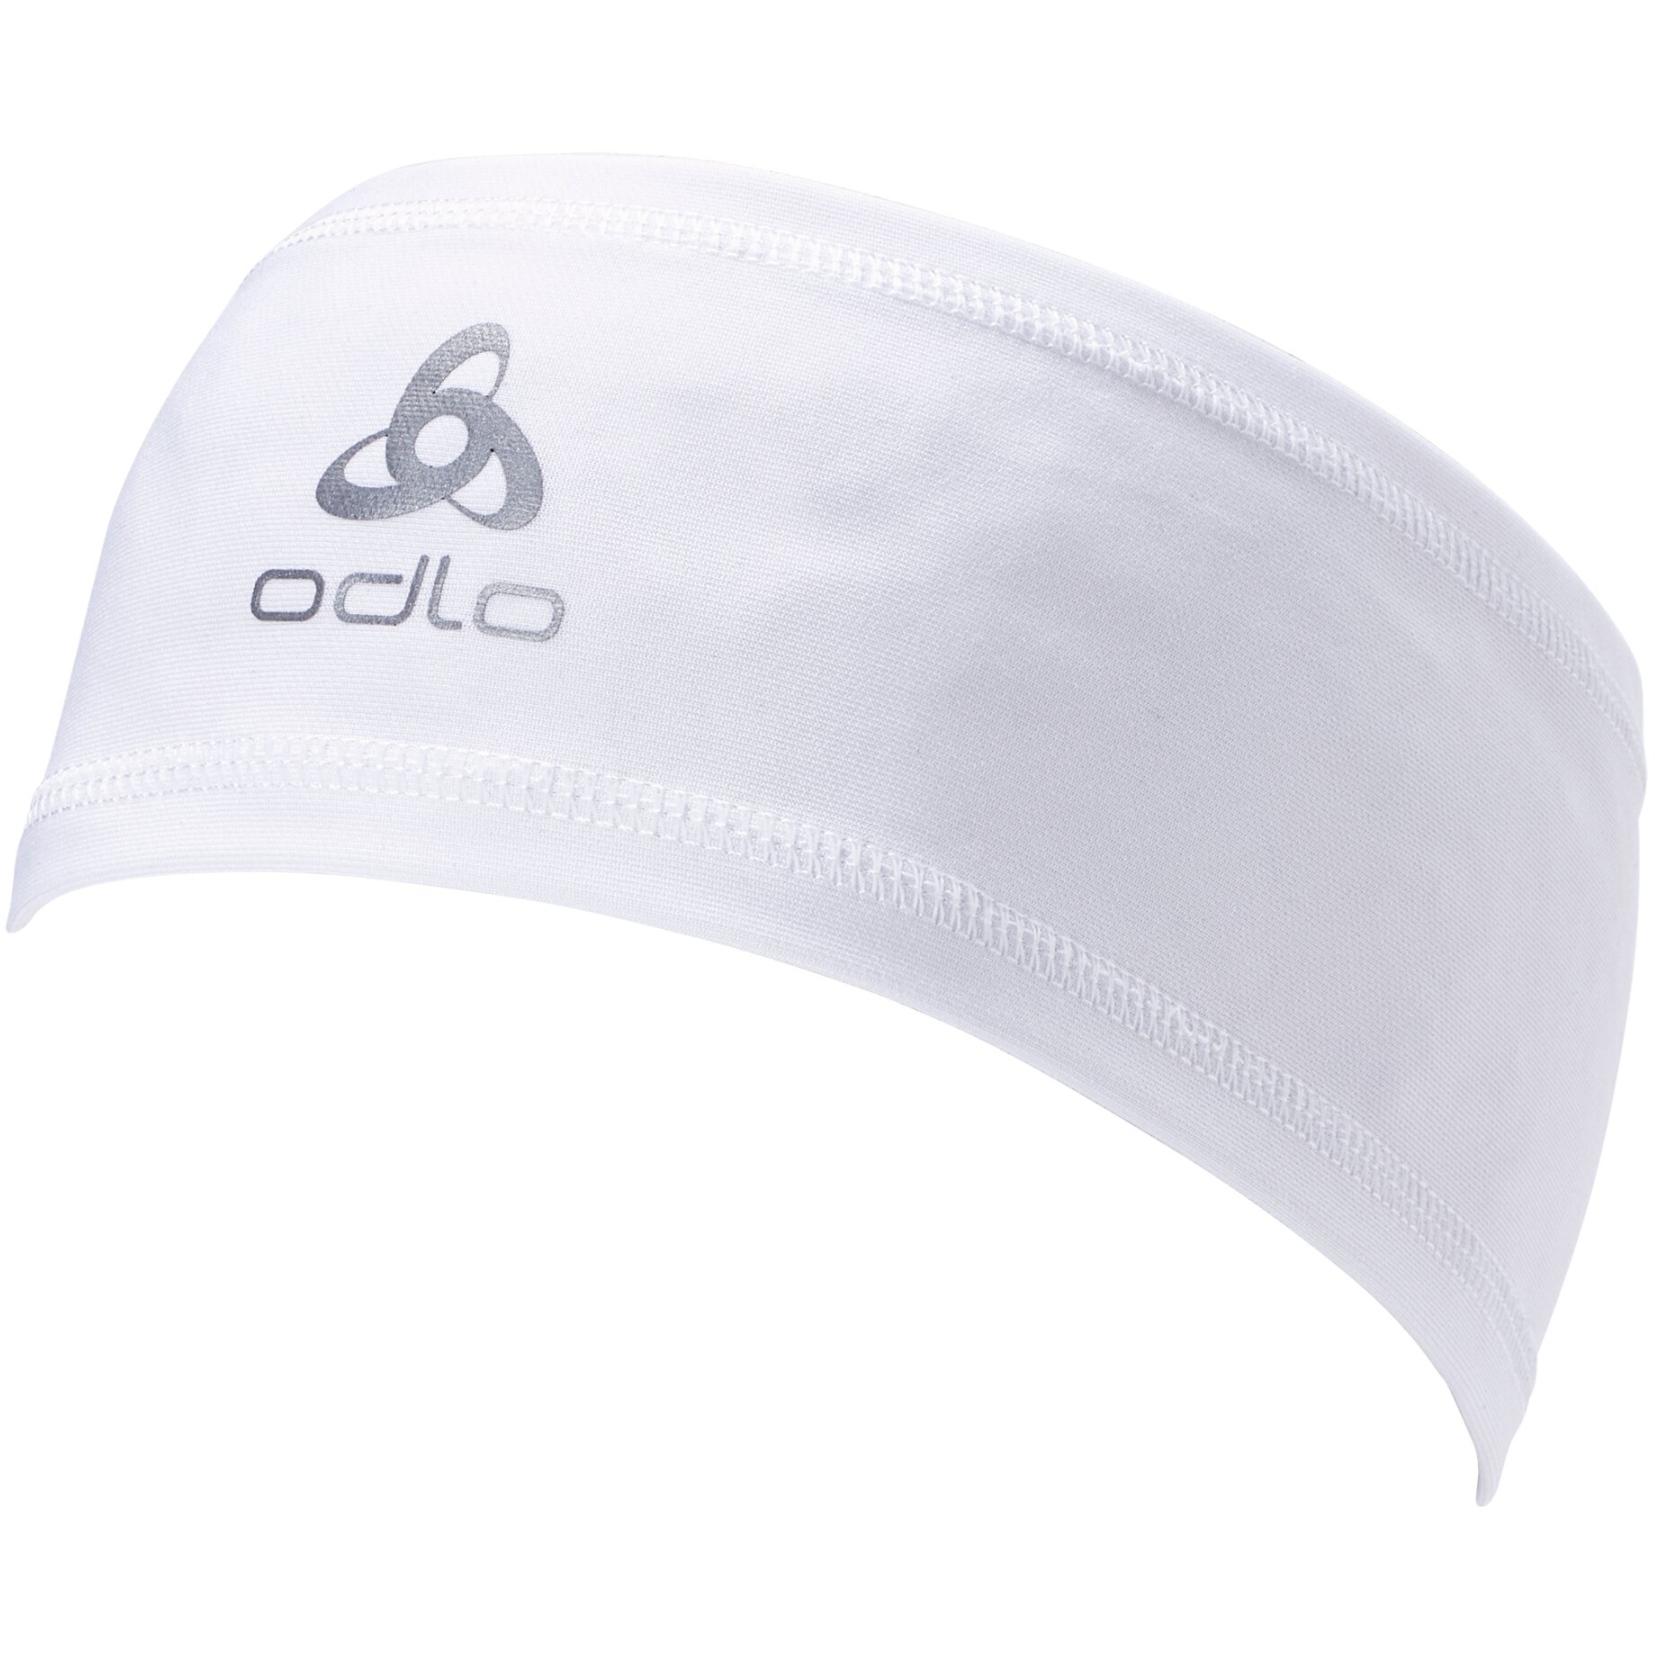 Produktbild von Odlo Polyknit Light Eco Stirnband - weiß